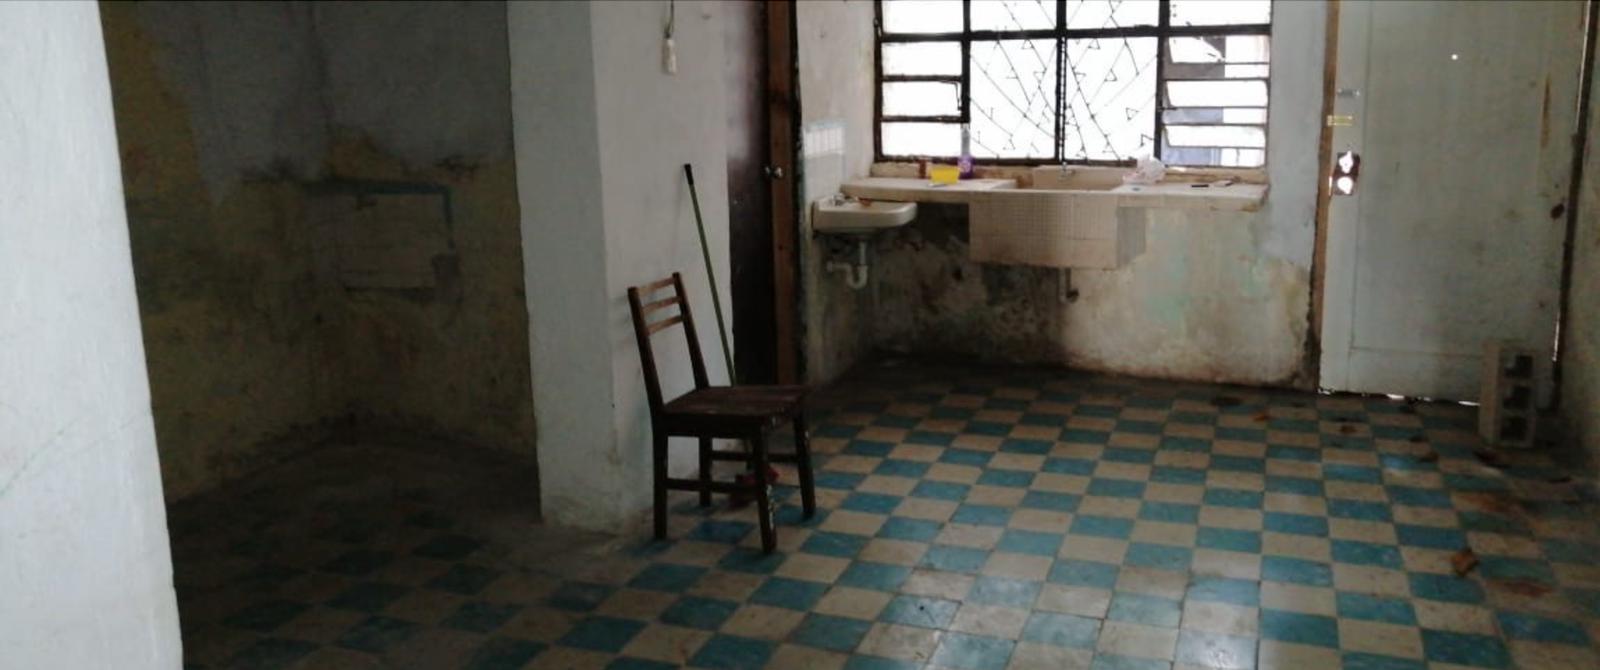 Casa en  Miraflores para remodelar